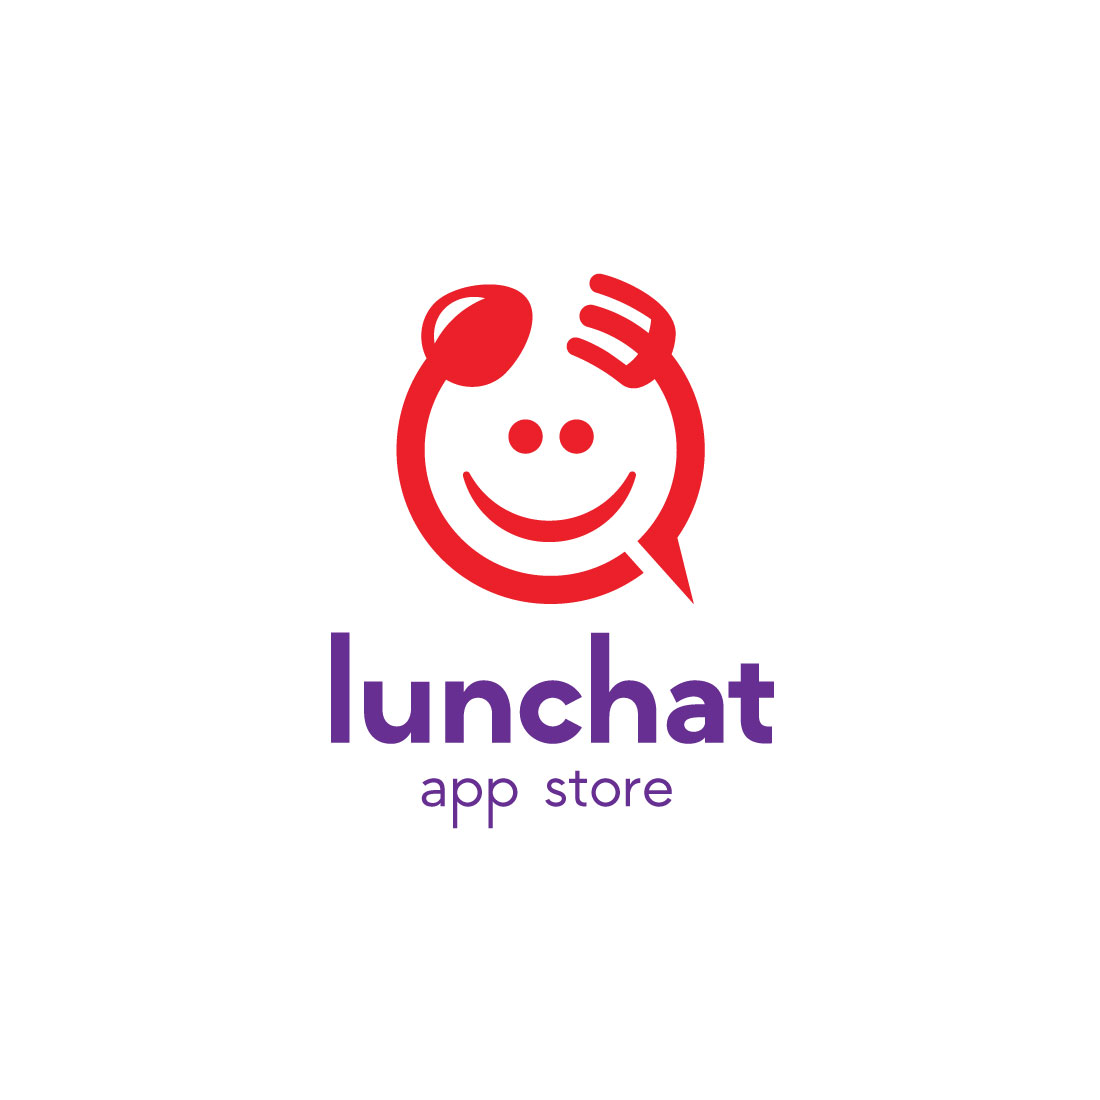 Restaurant Chat logo design vector preview image.